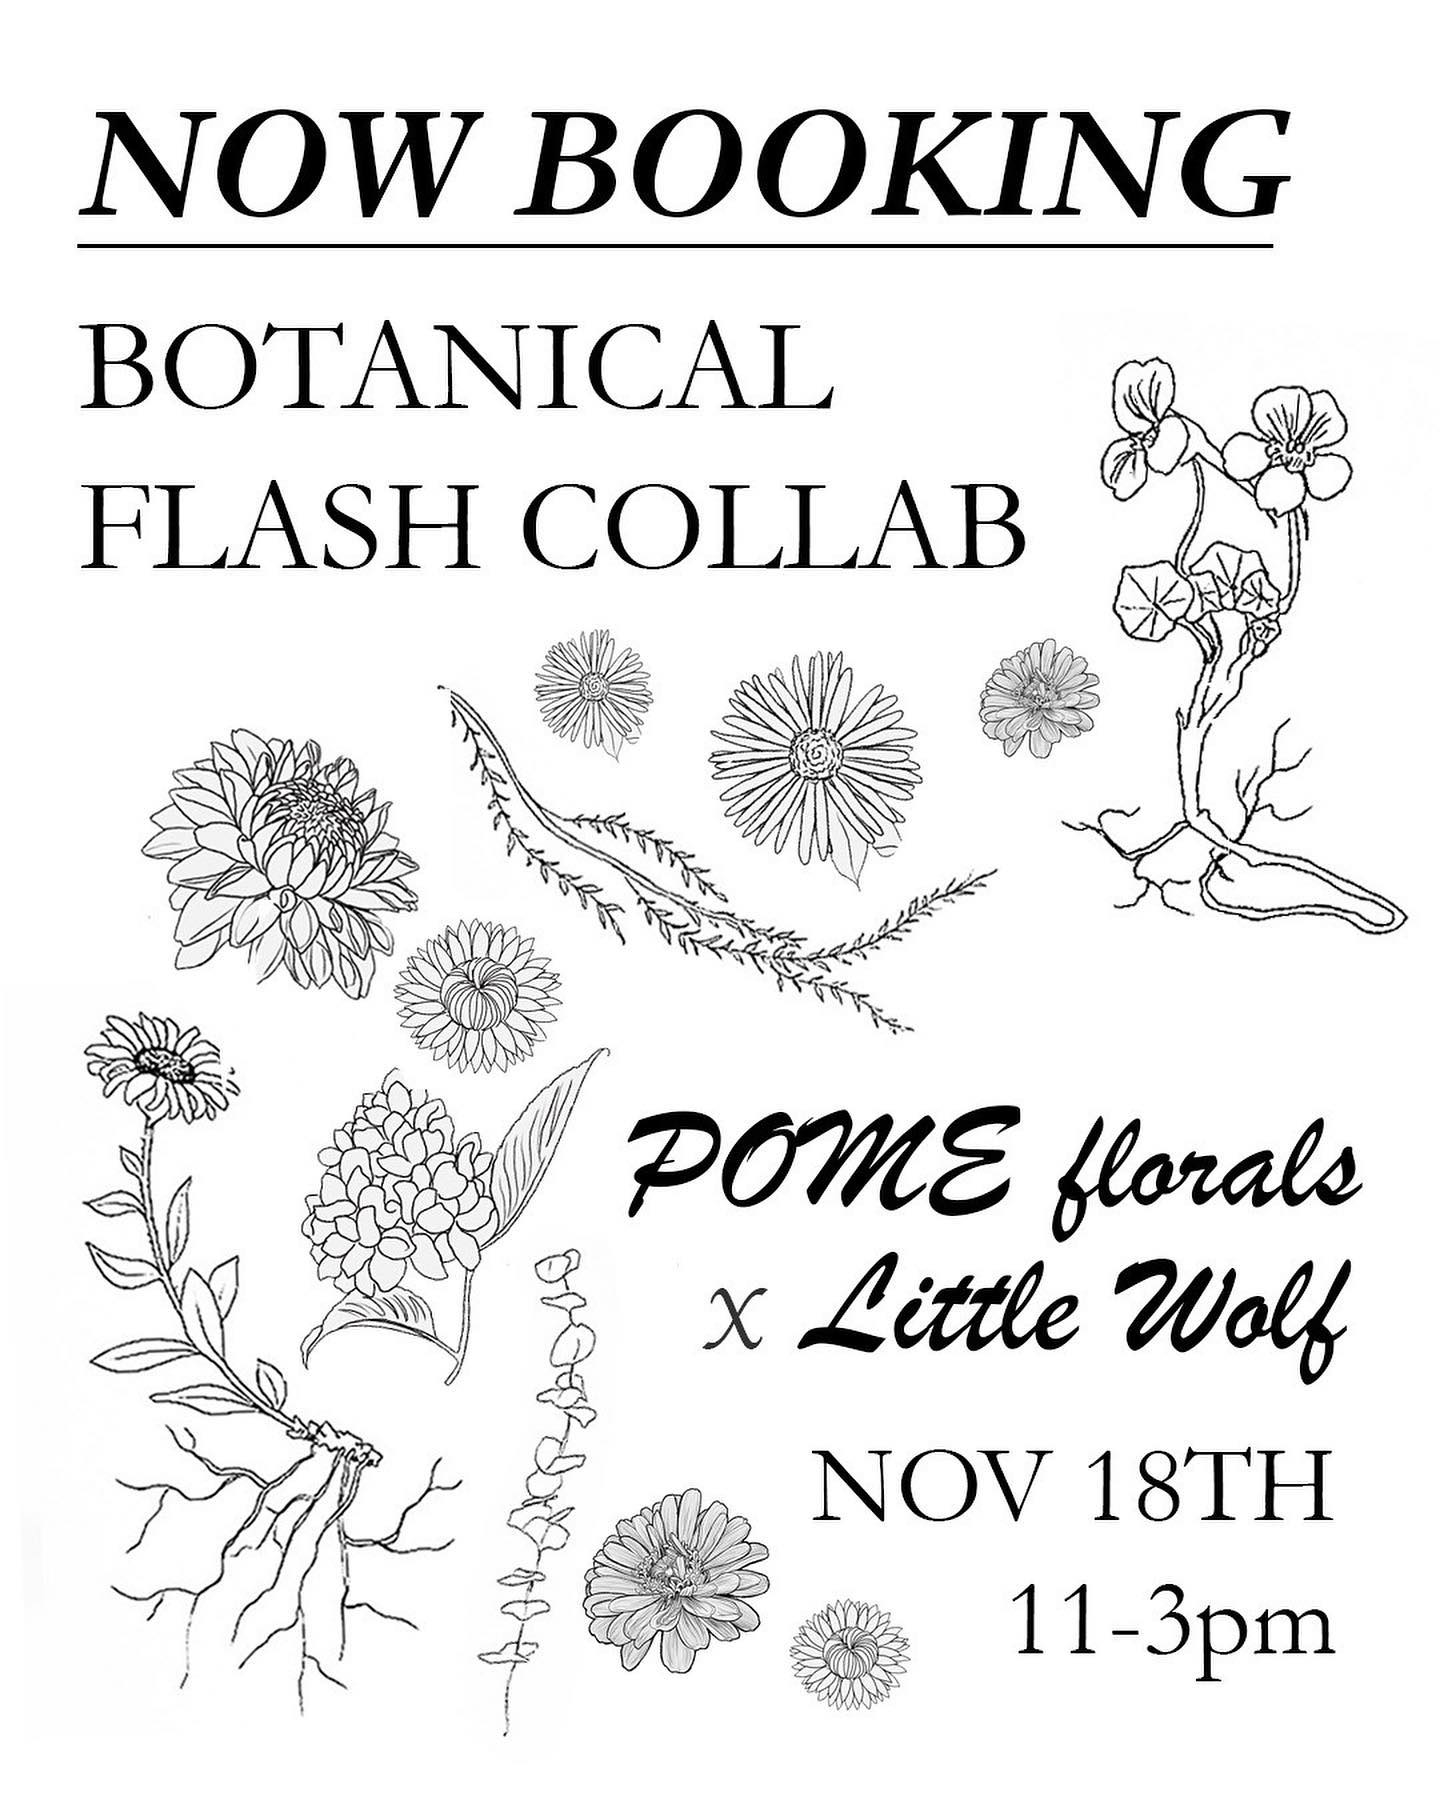 Flier for POME florals x Little Wolf Botanical Flash Collab